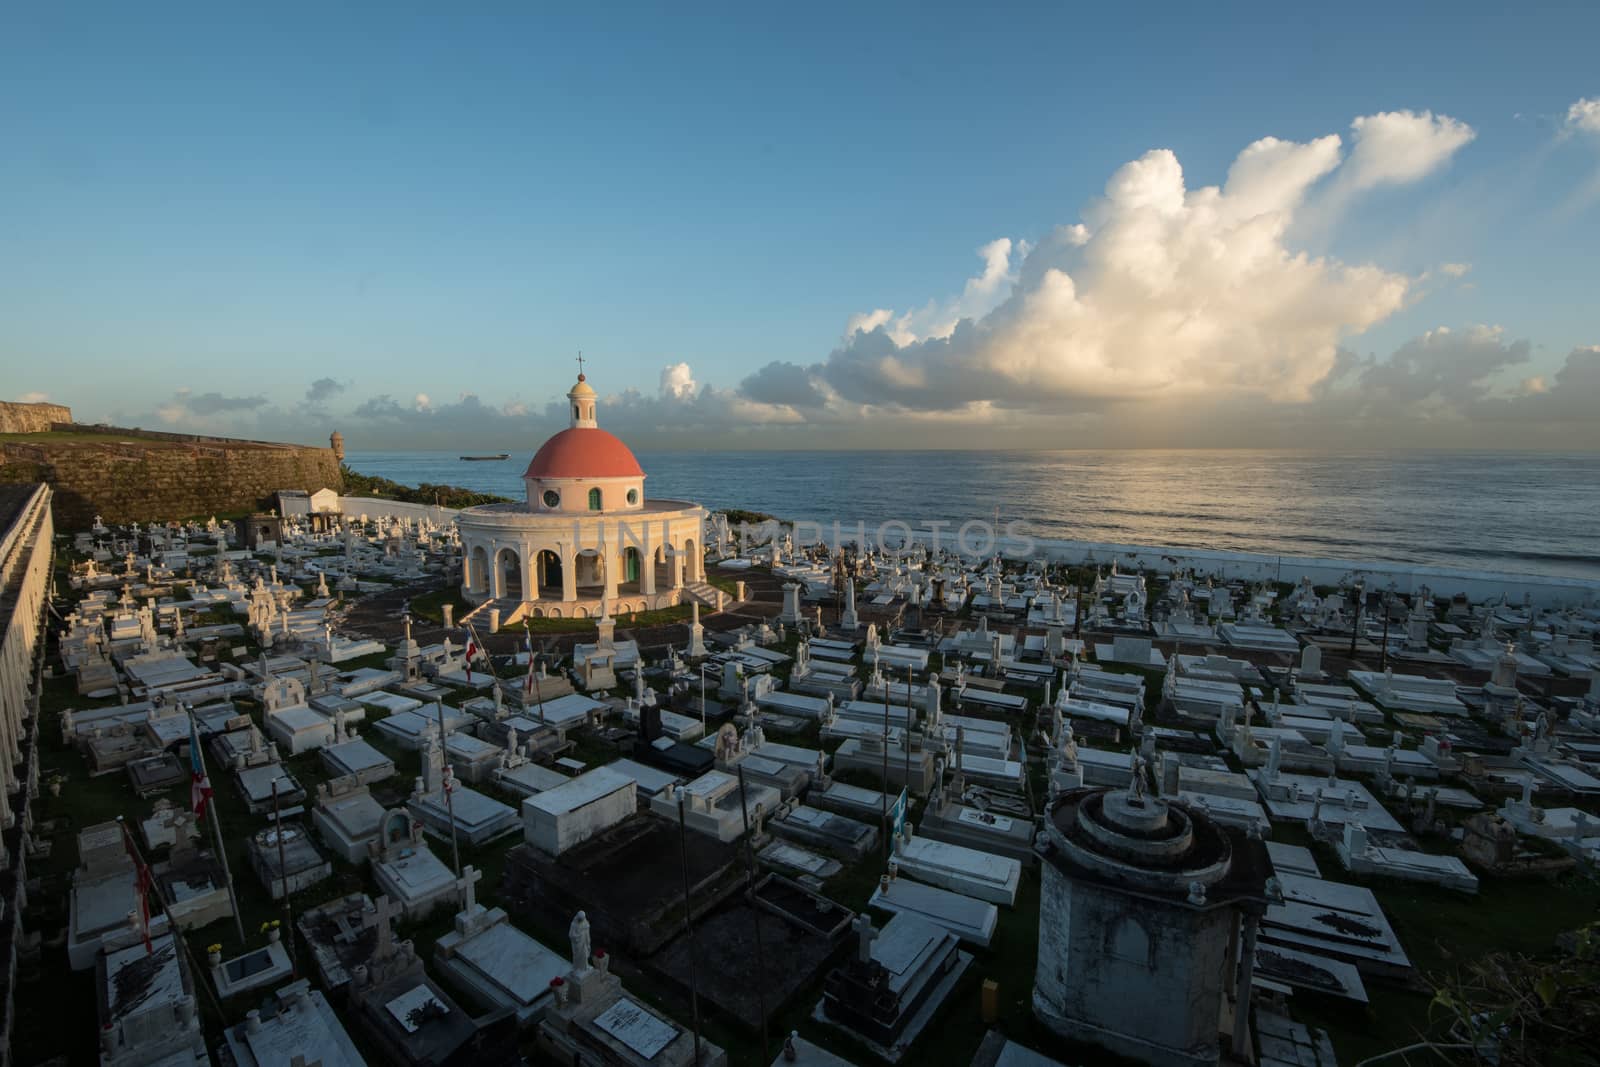 Sunrise view of San Juan Cemetery